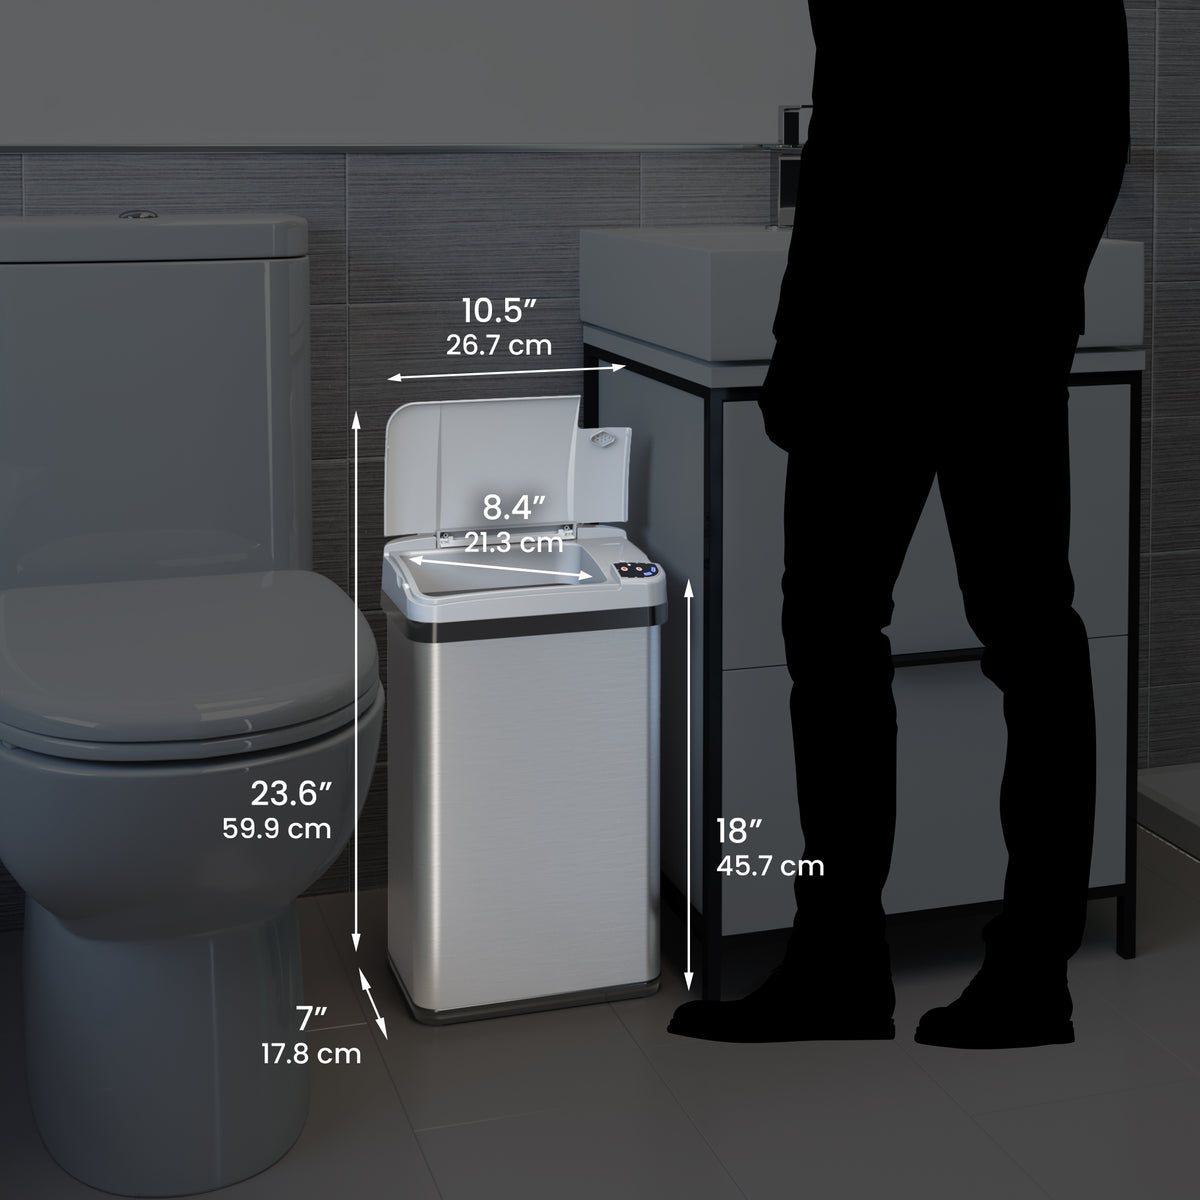 4 Gallon / 15 Liter Sensor Bathroom Trash Can dimensions